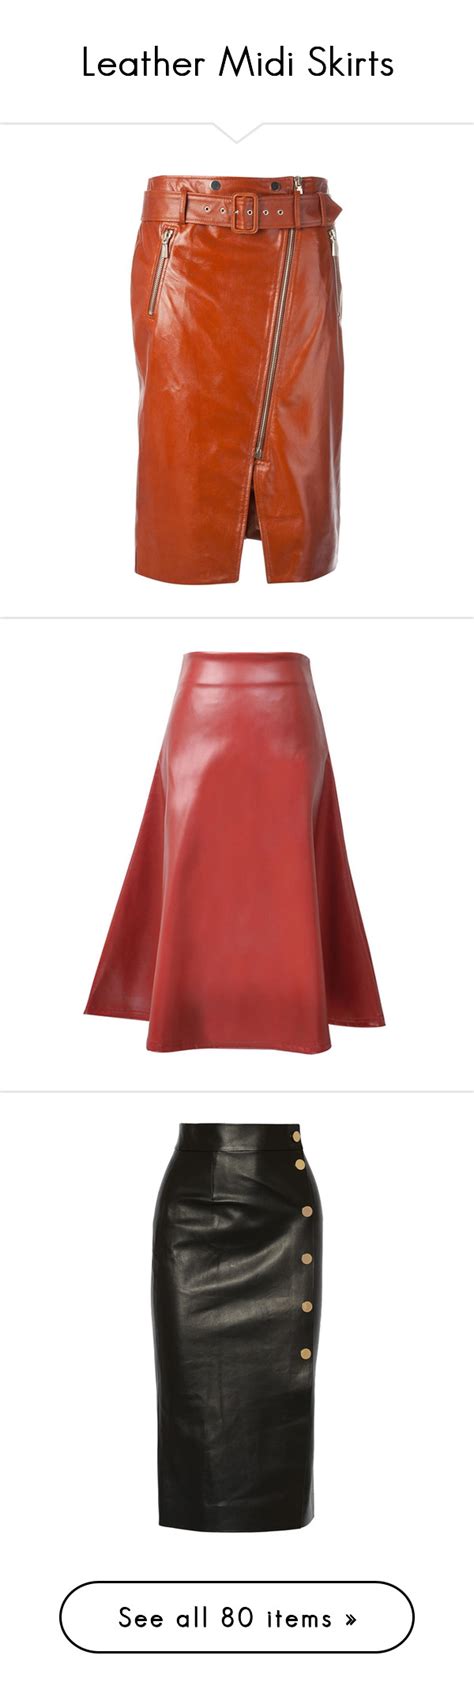 leather midi skirts leather midi skirt skirts red high waisted skirt